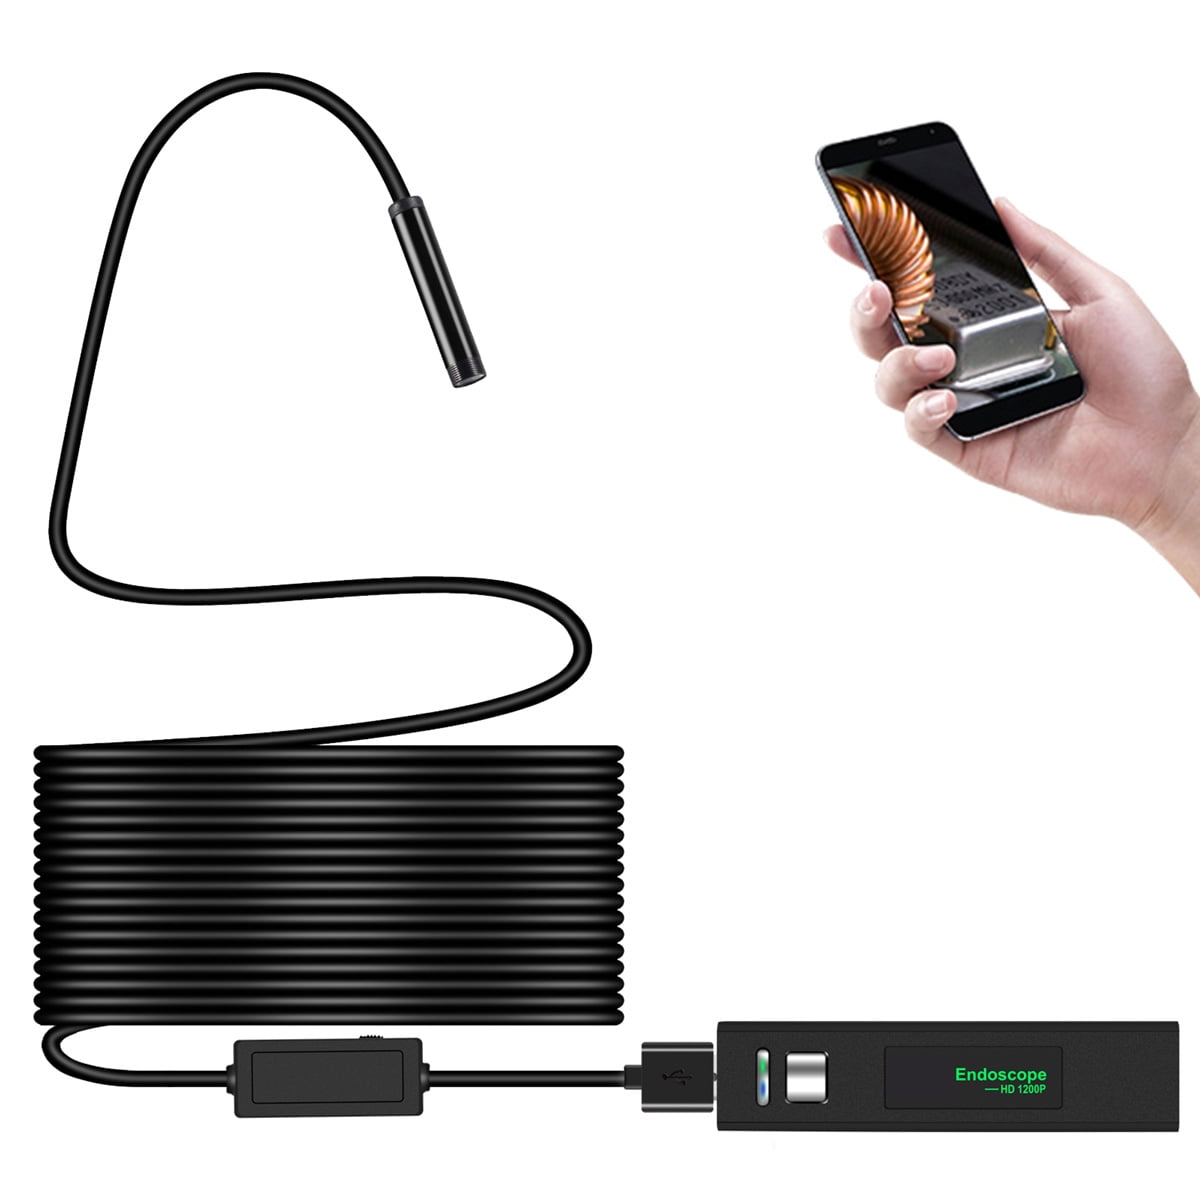 Waterproof 2M/6.6Ft Mini USB Endoscope Handheld Borescope 5.5mm Lens Digital Inspection Camera with 6 Adjustable LED Lights 